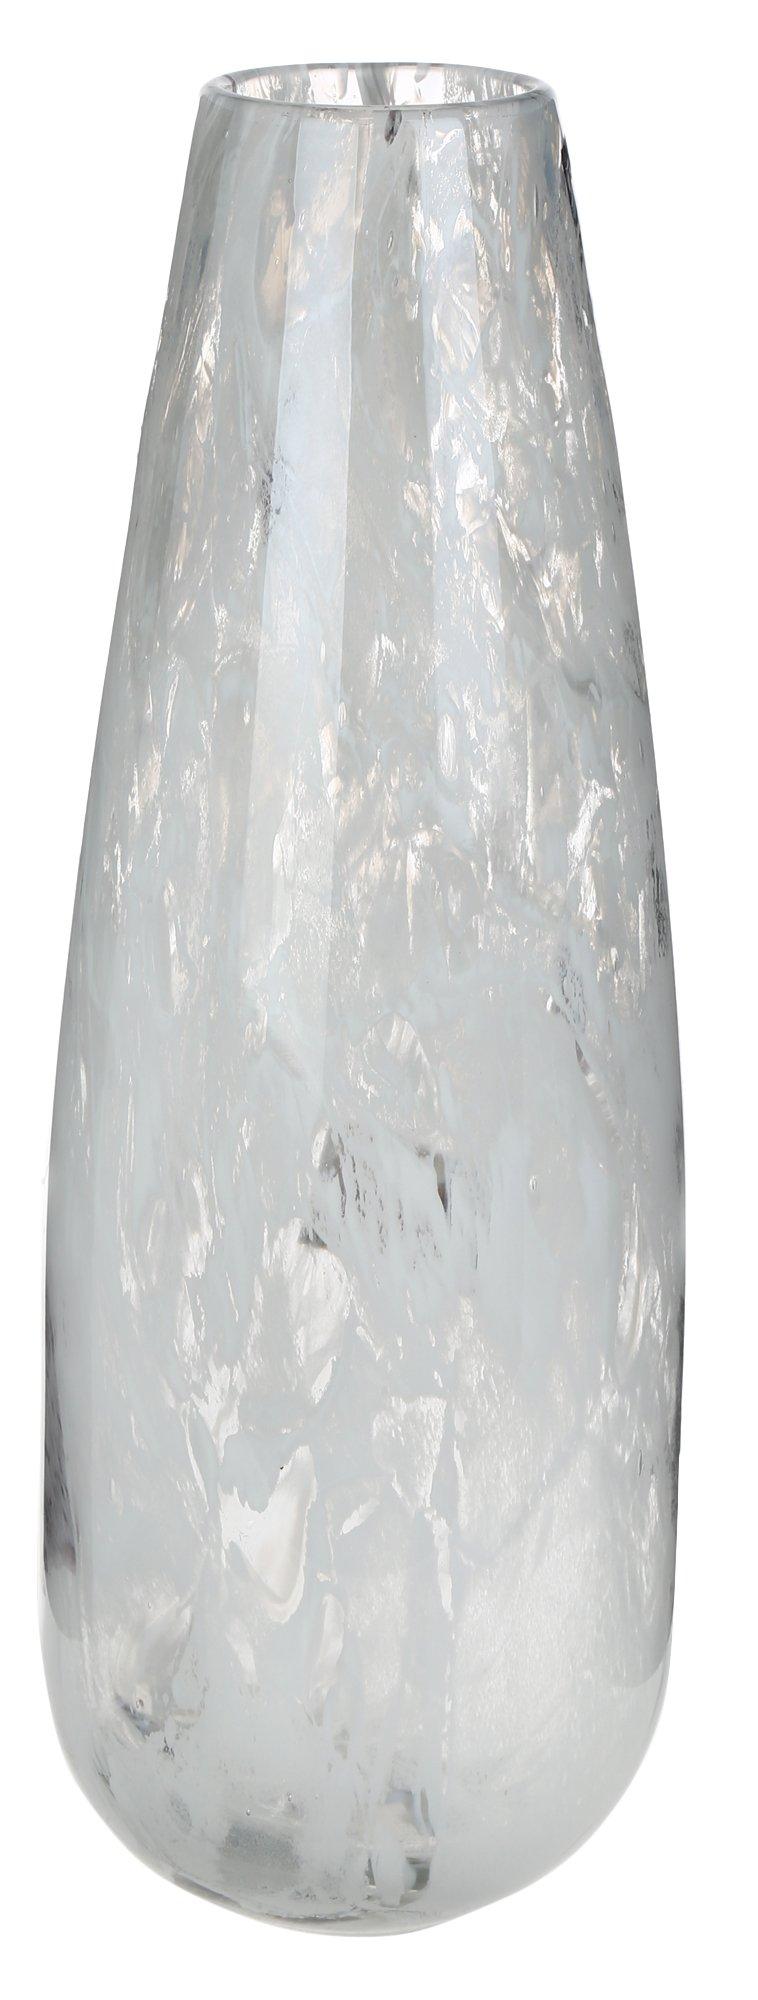 19x7 Decorative Glass Vase